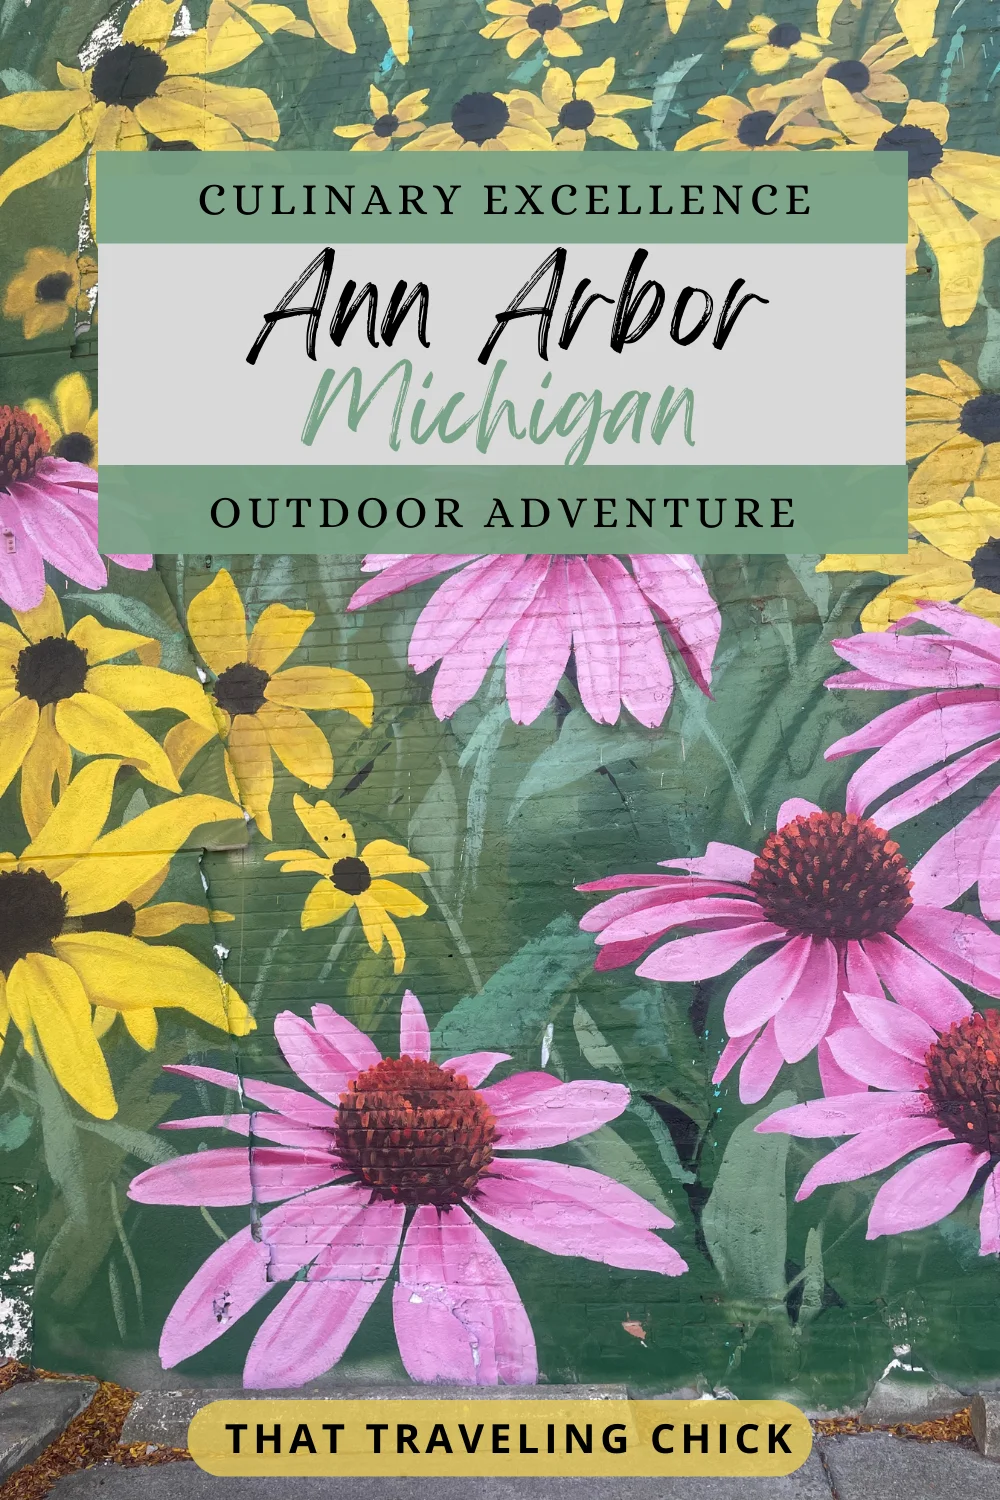 Ann Arbor Michigan